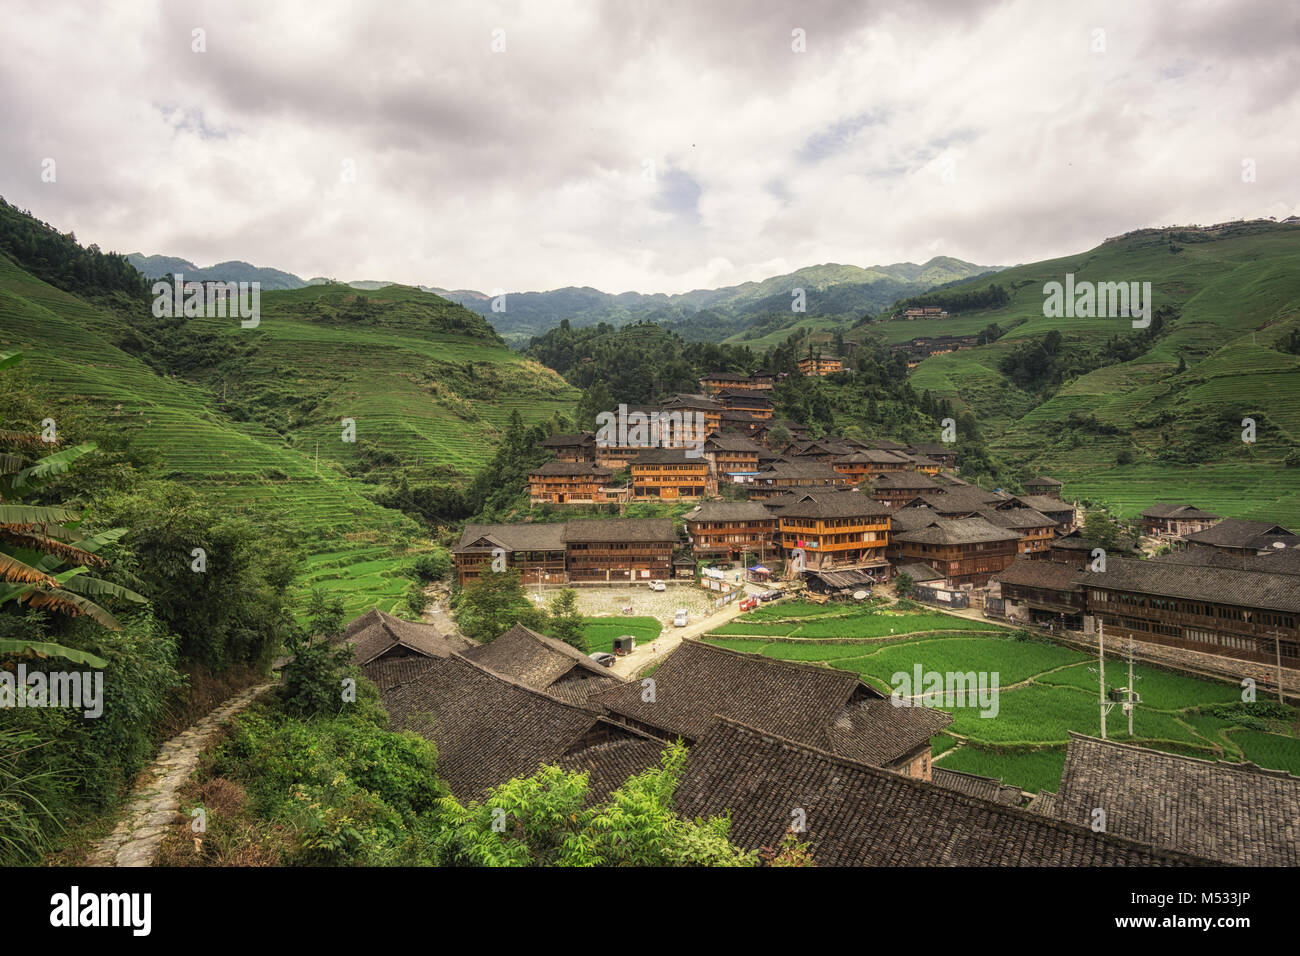 Dazhai Village in China Stockfoto